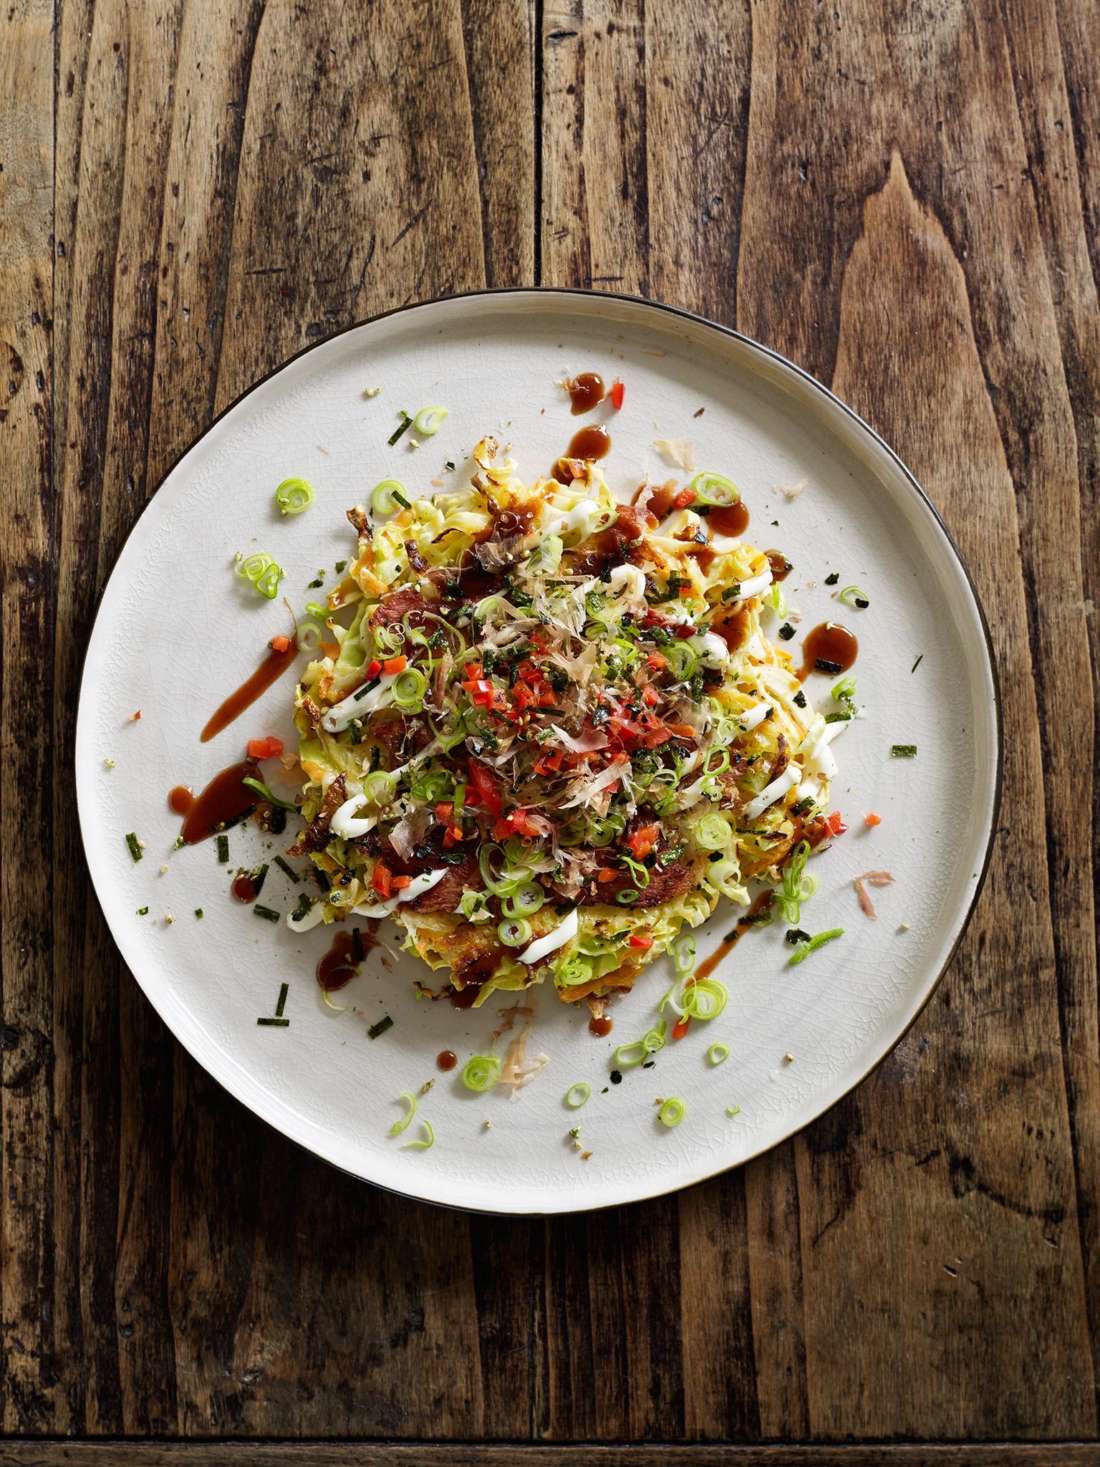 Batter up – Fiona Smith shares her love for okonomiyaki, the Japanese pancake